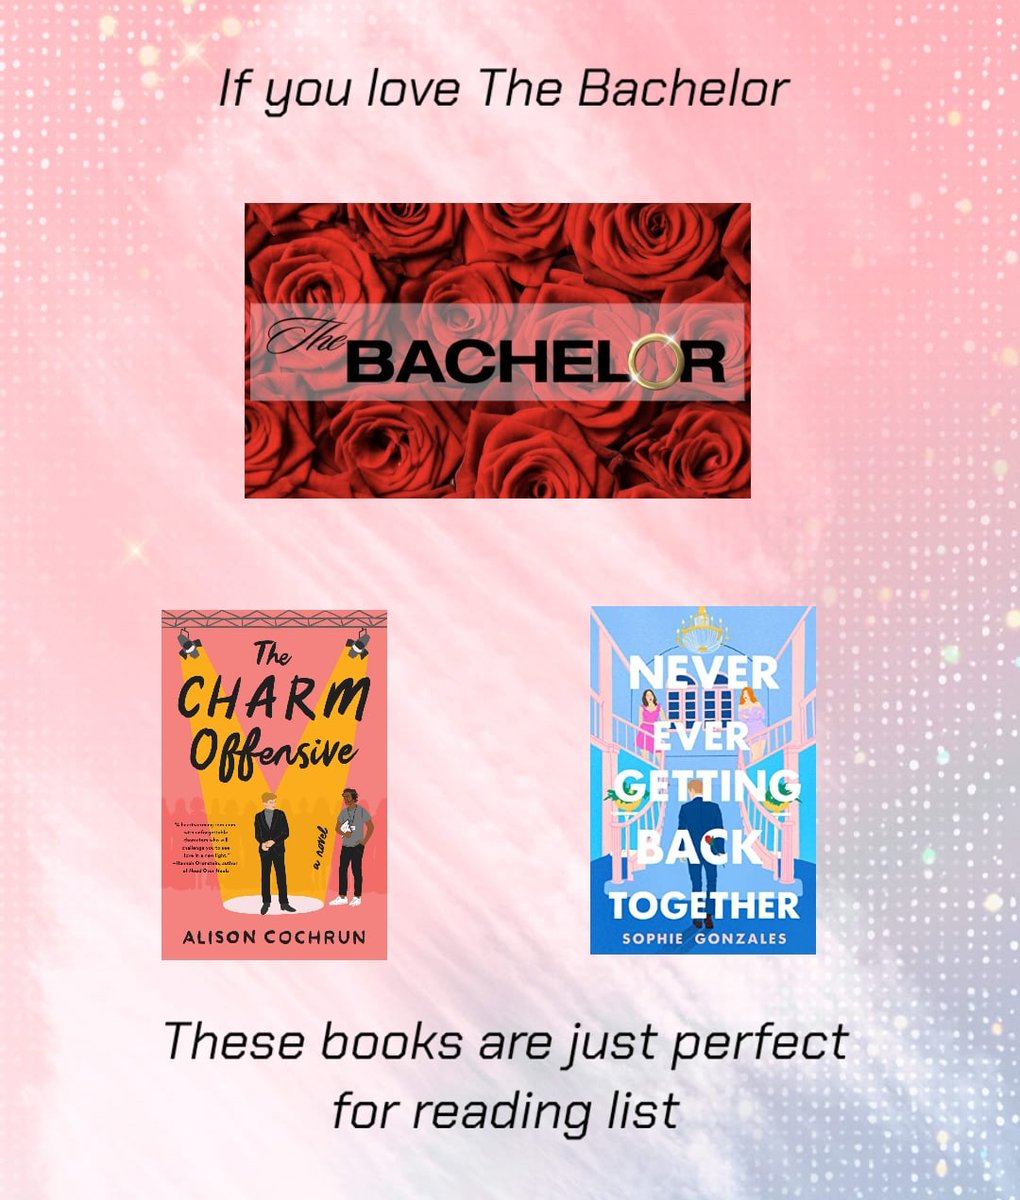 Book Recommendations 😍💚✨

#bookfest #booktwt #books #BookRecommendations #bookreading #novels #thebachelor #bookstoread #booktok #booksandme #booksforever #bestbooks #RomanceReaders #iloveromance #mmromance #queerlove #datingshow